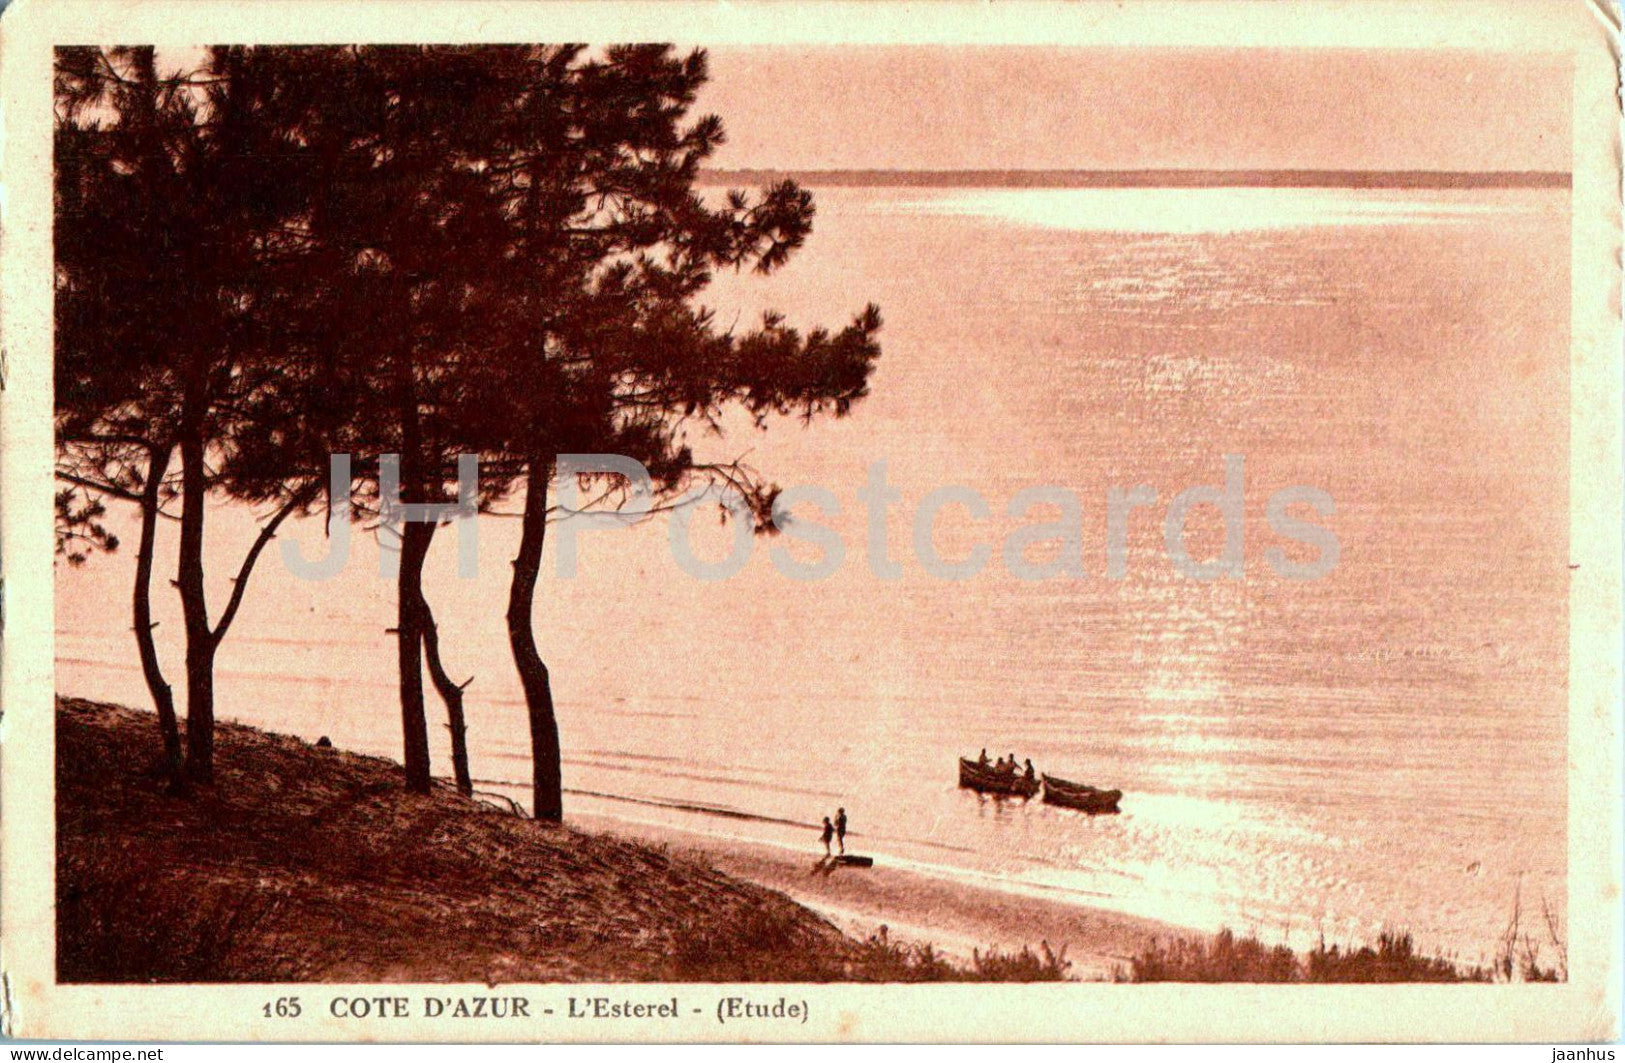 Cote d'Azur - L'Esterel - etude - 165 - old postcard - France - unused - JH Postcards